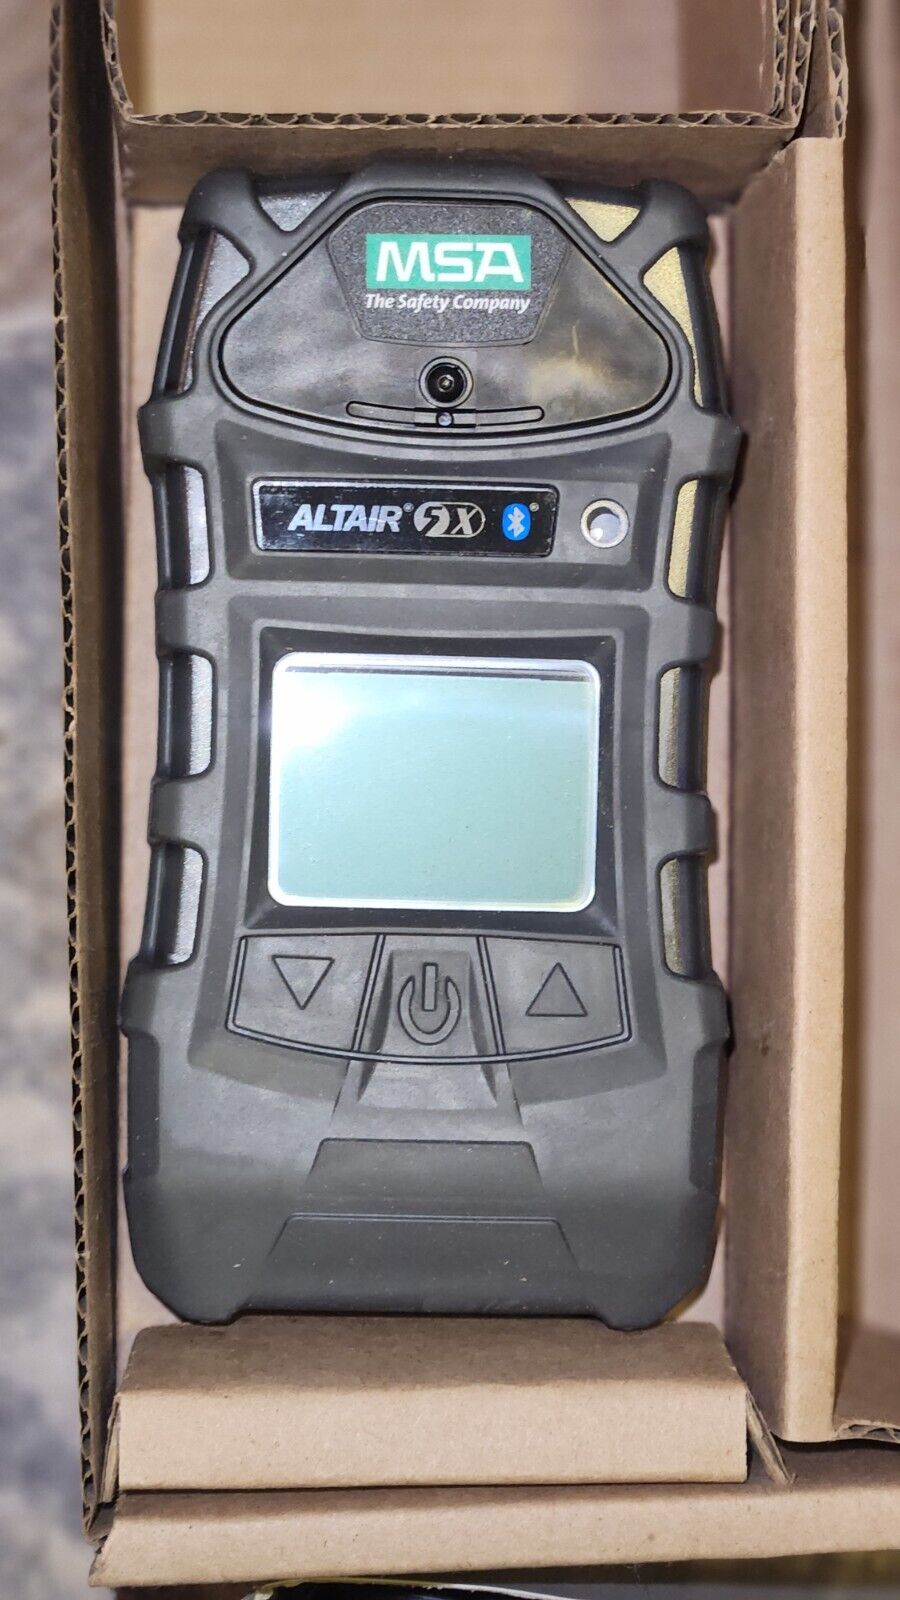 MSA Altair 5X Multi-Gas Detector 10116926 - OPEN BOX - Practically NEW